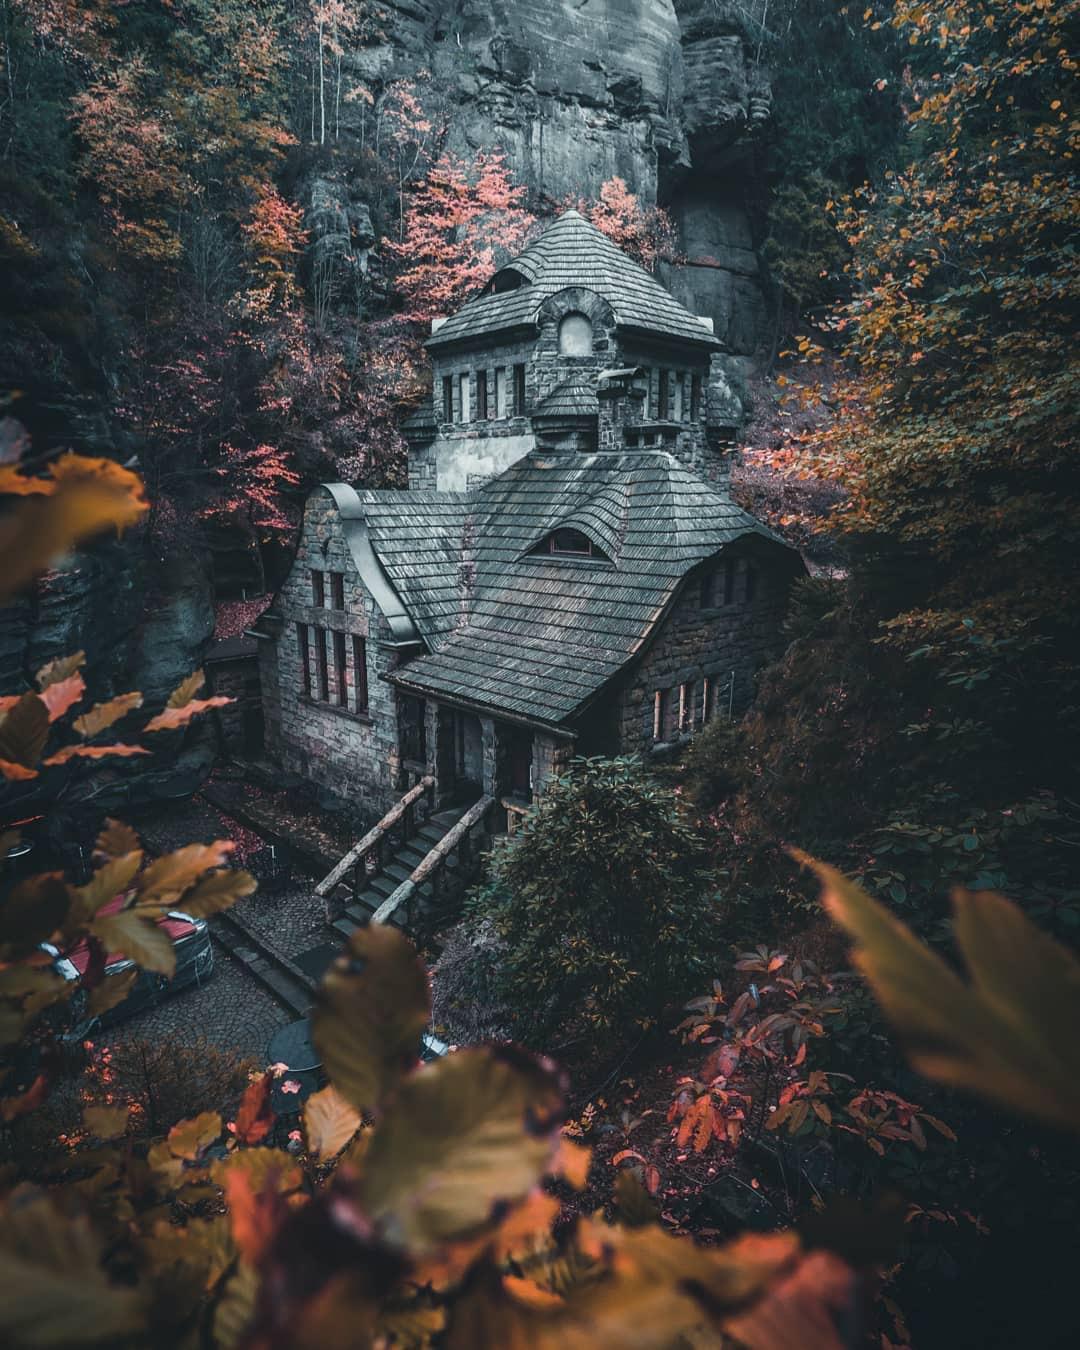 A foreboding cabin in the Czech Republic